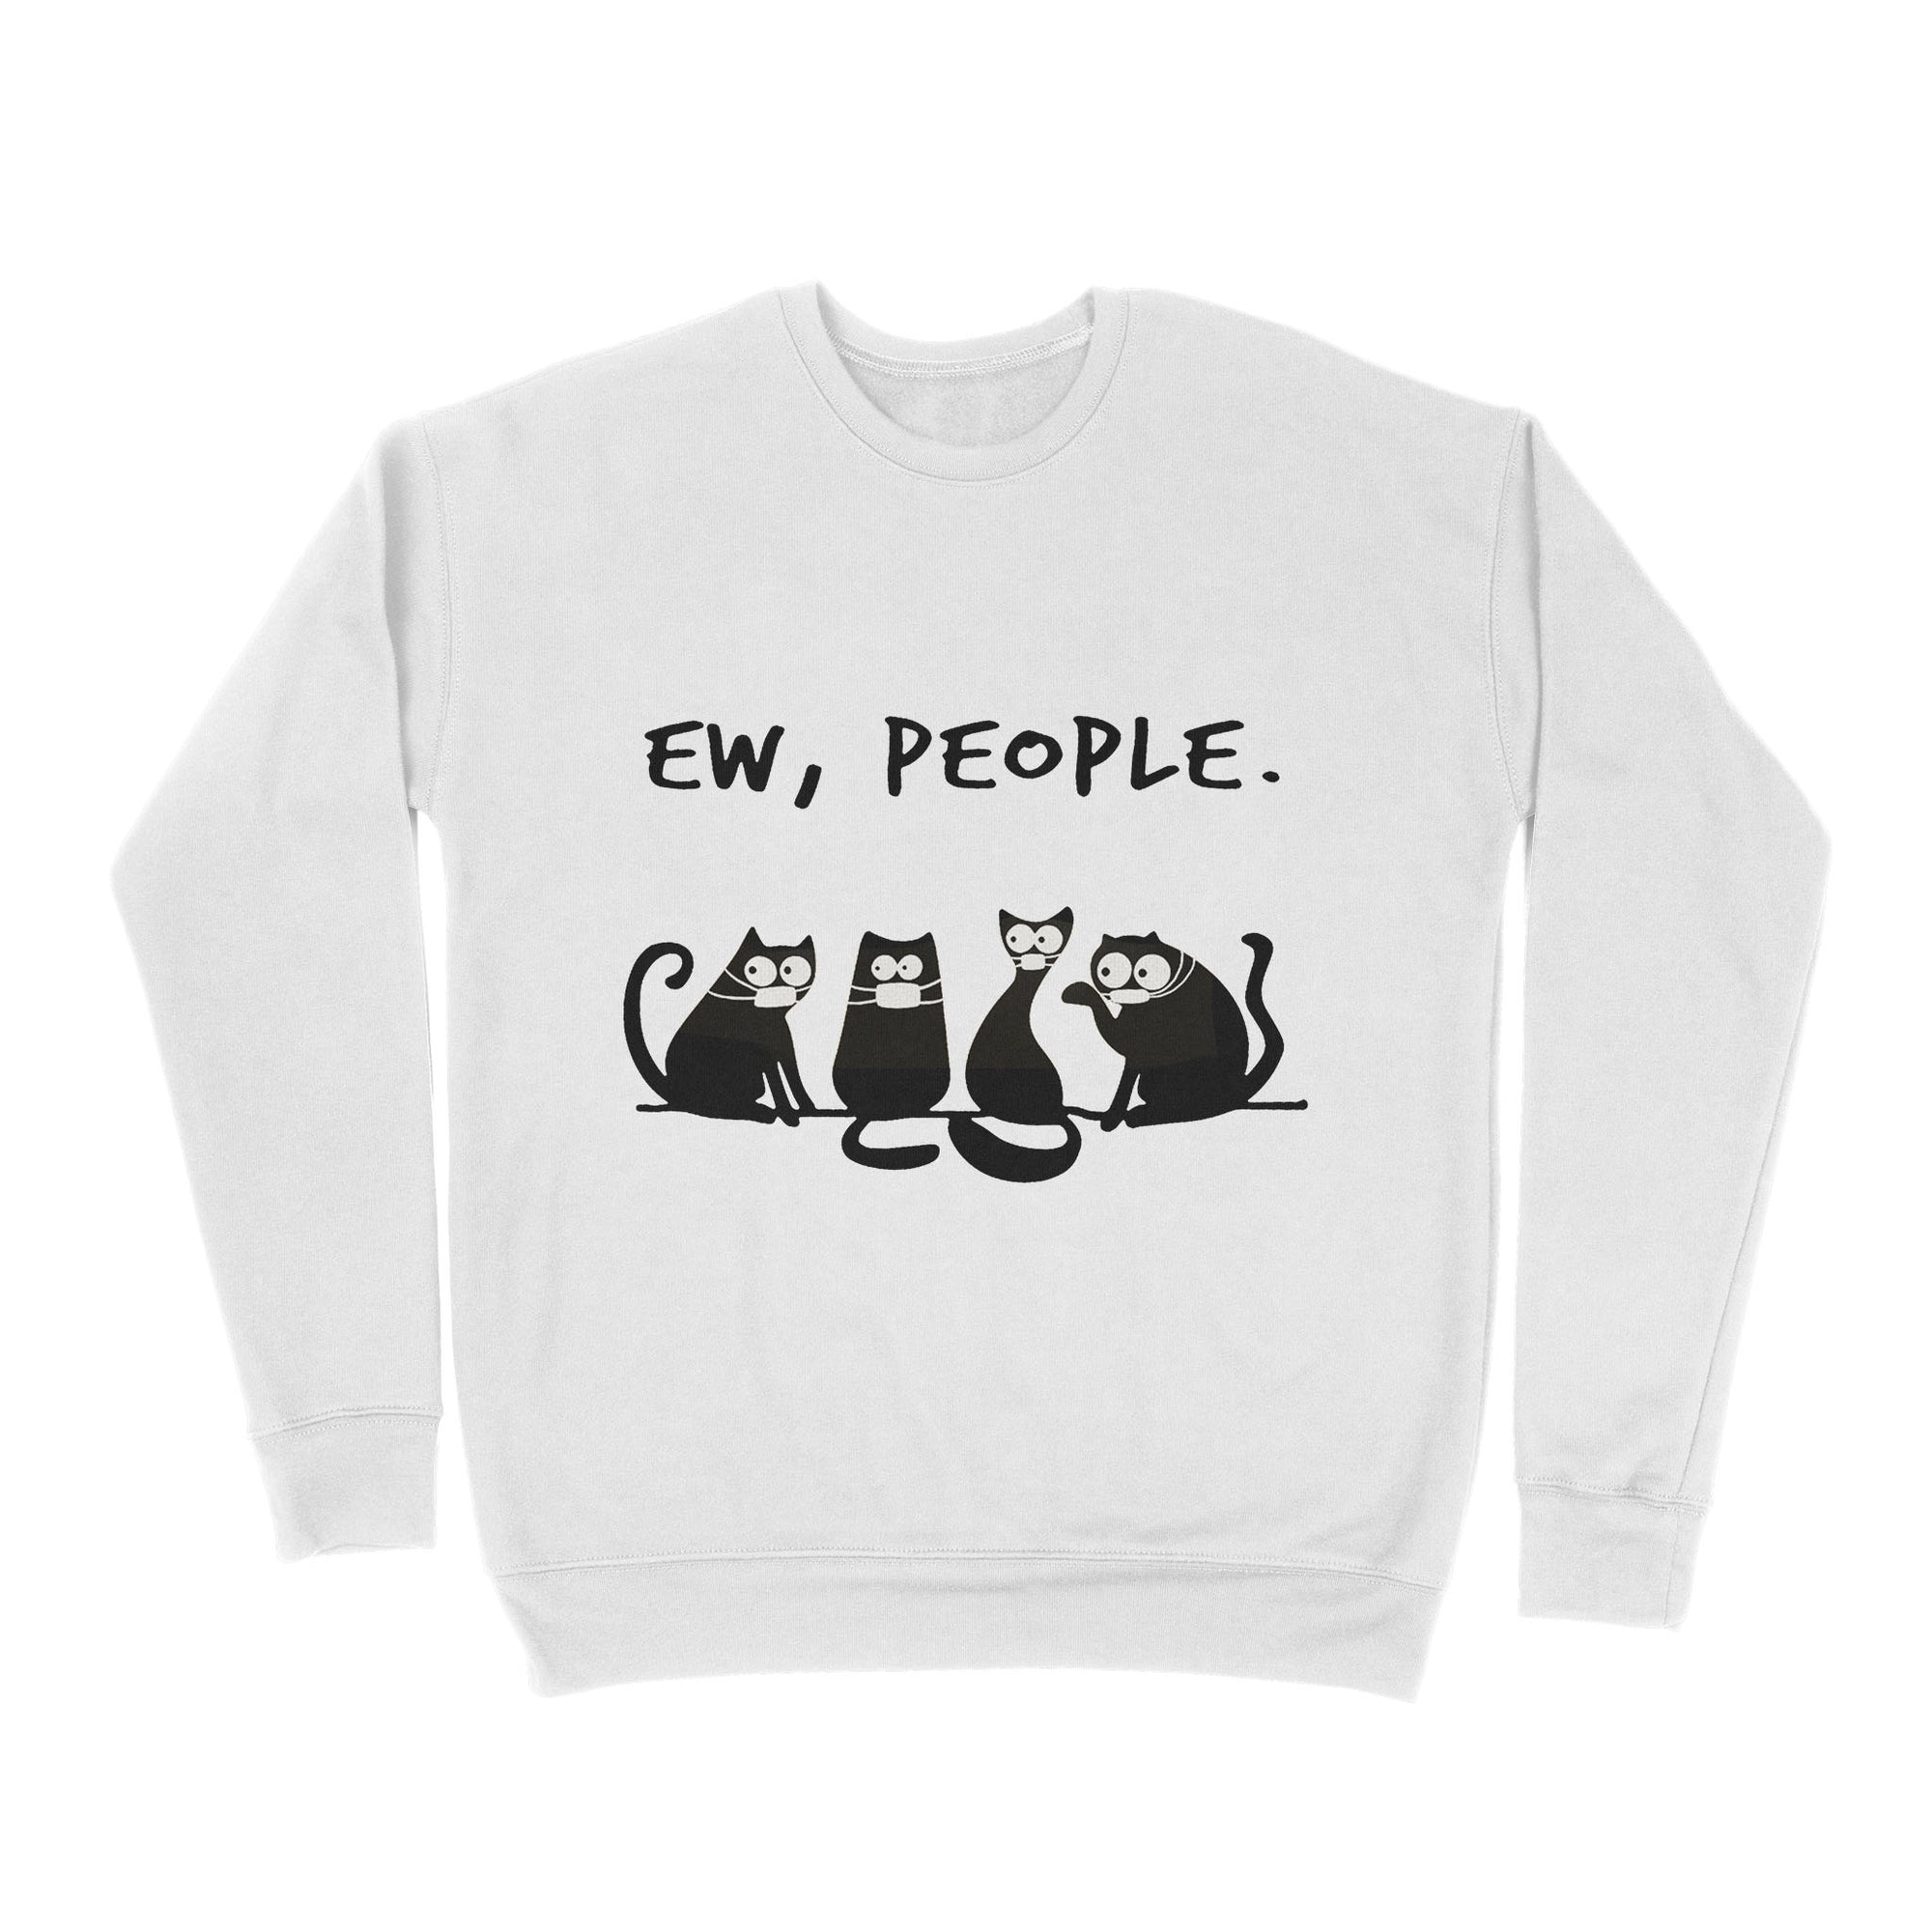 Premium Crew Neck Sweatshirt - Ew People Funny Black Cat Wearing Mask